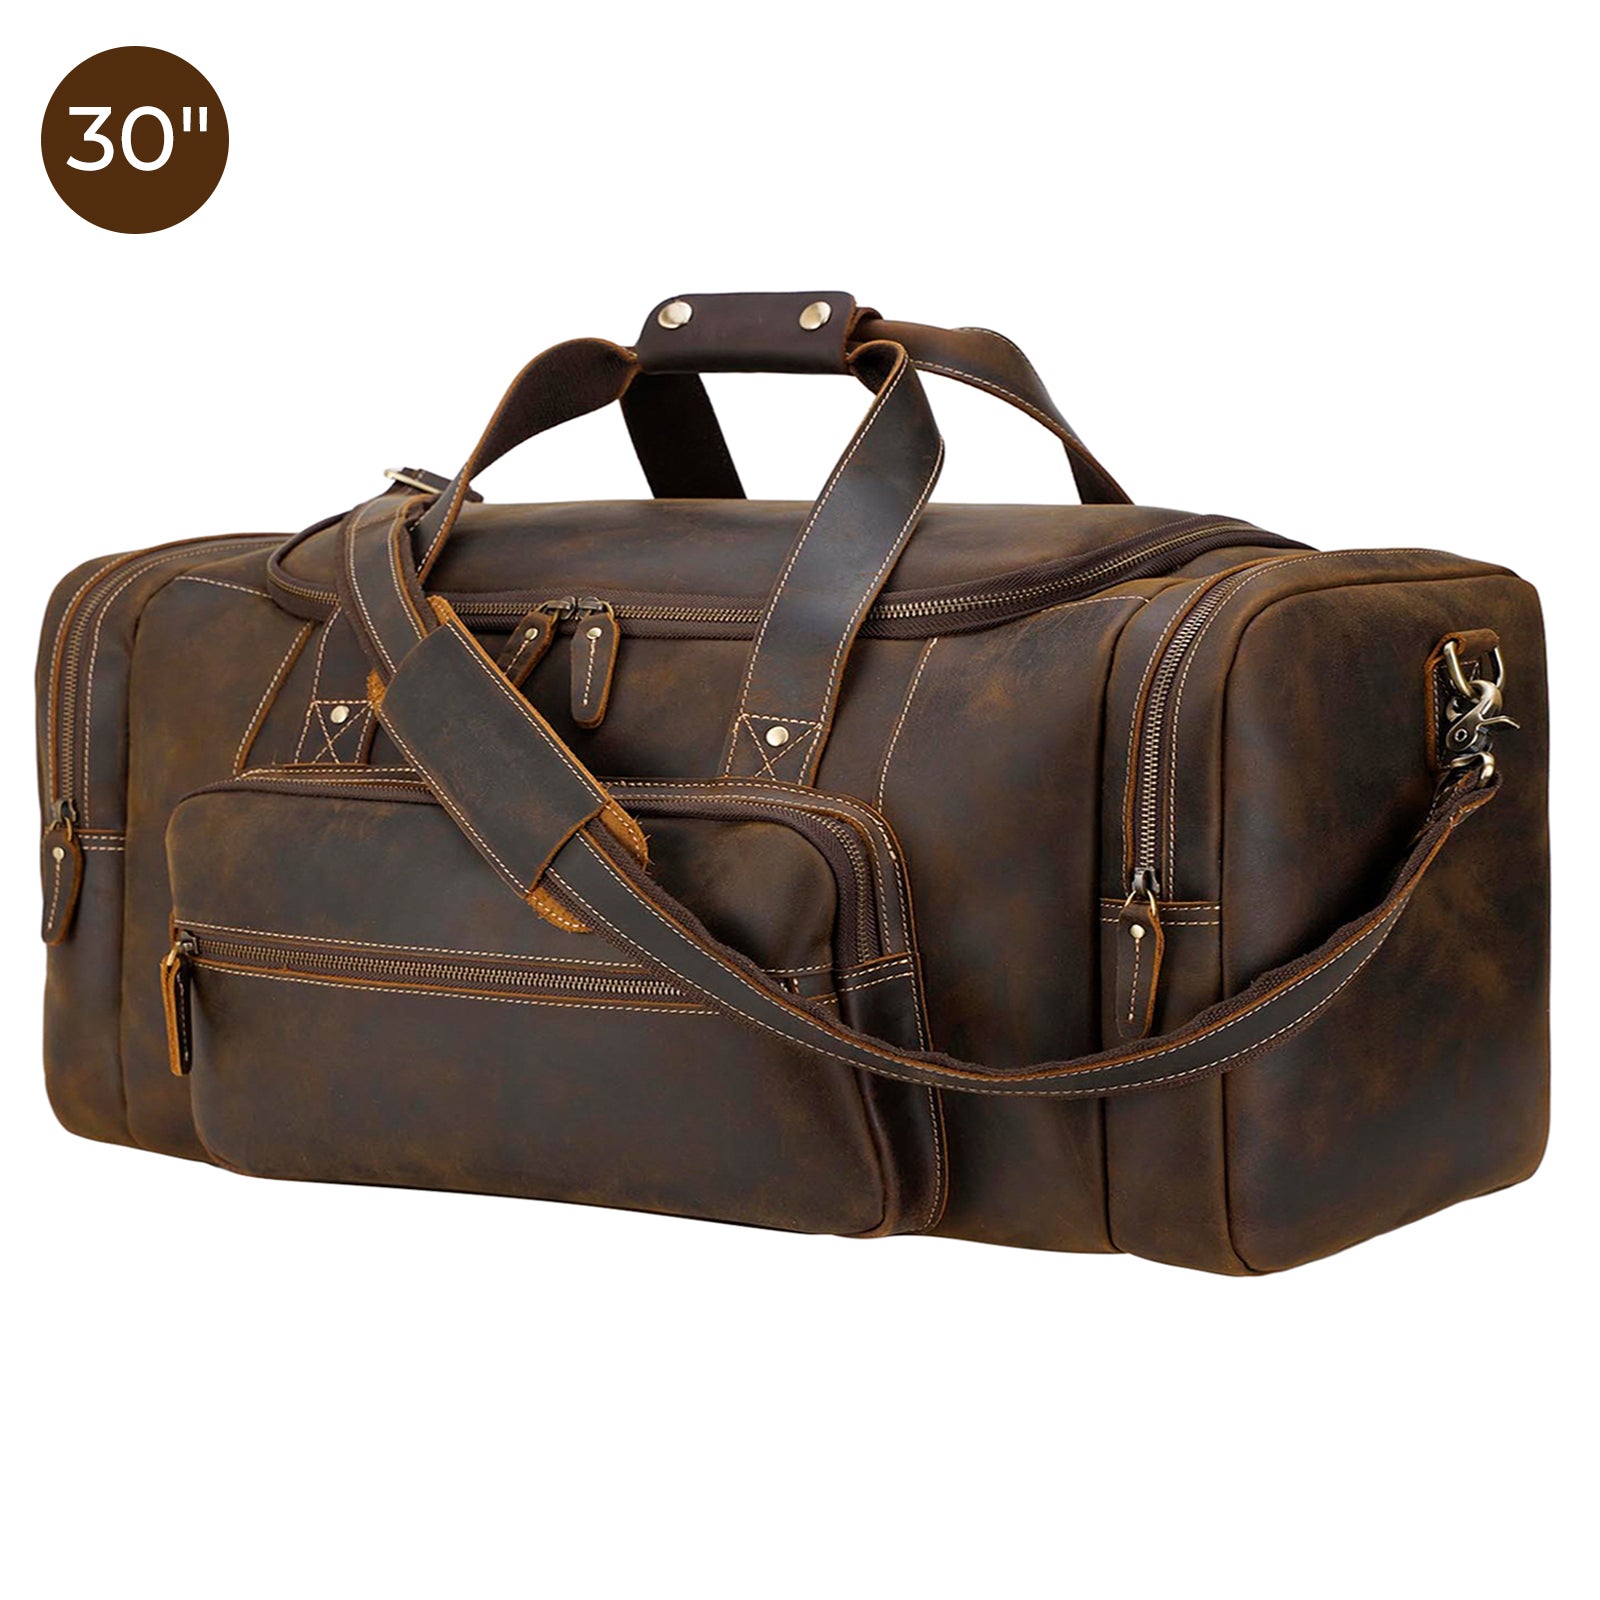 Handmade Men's Leather Vintage Duffle Luggage Weekender Gym Carry on Travel  Bag